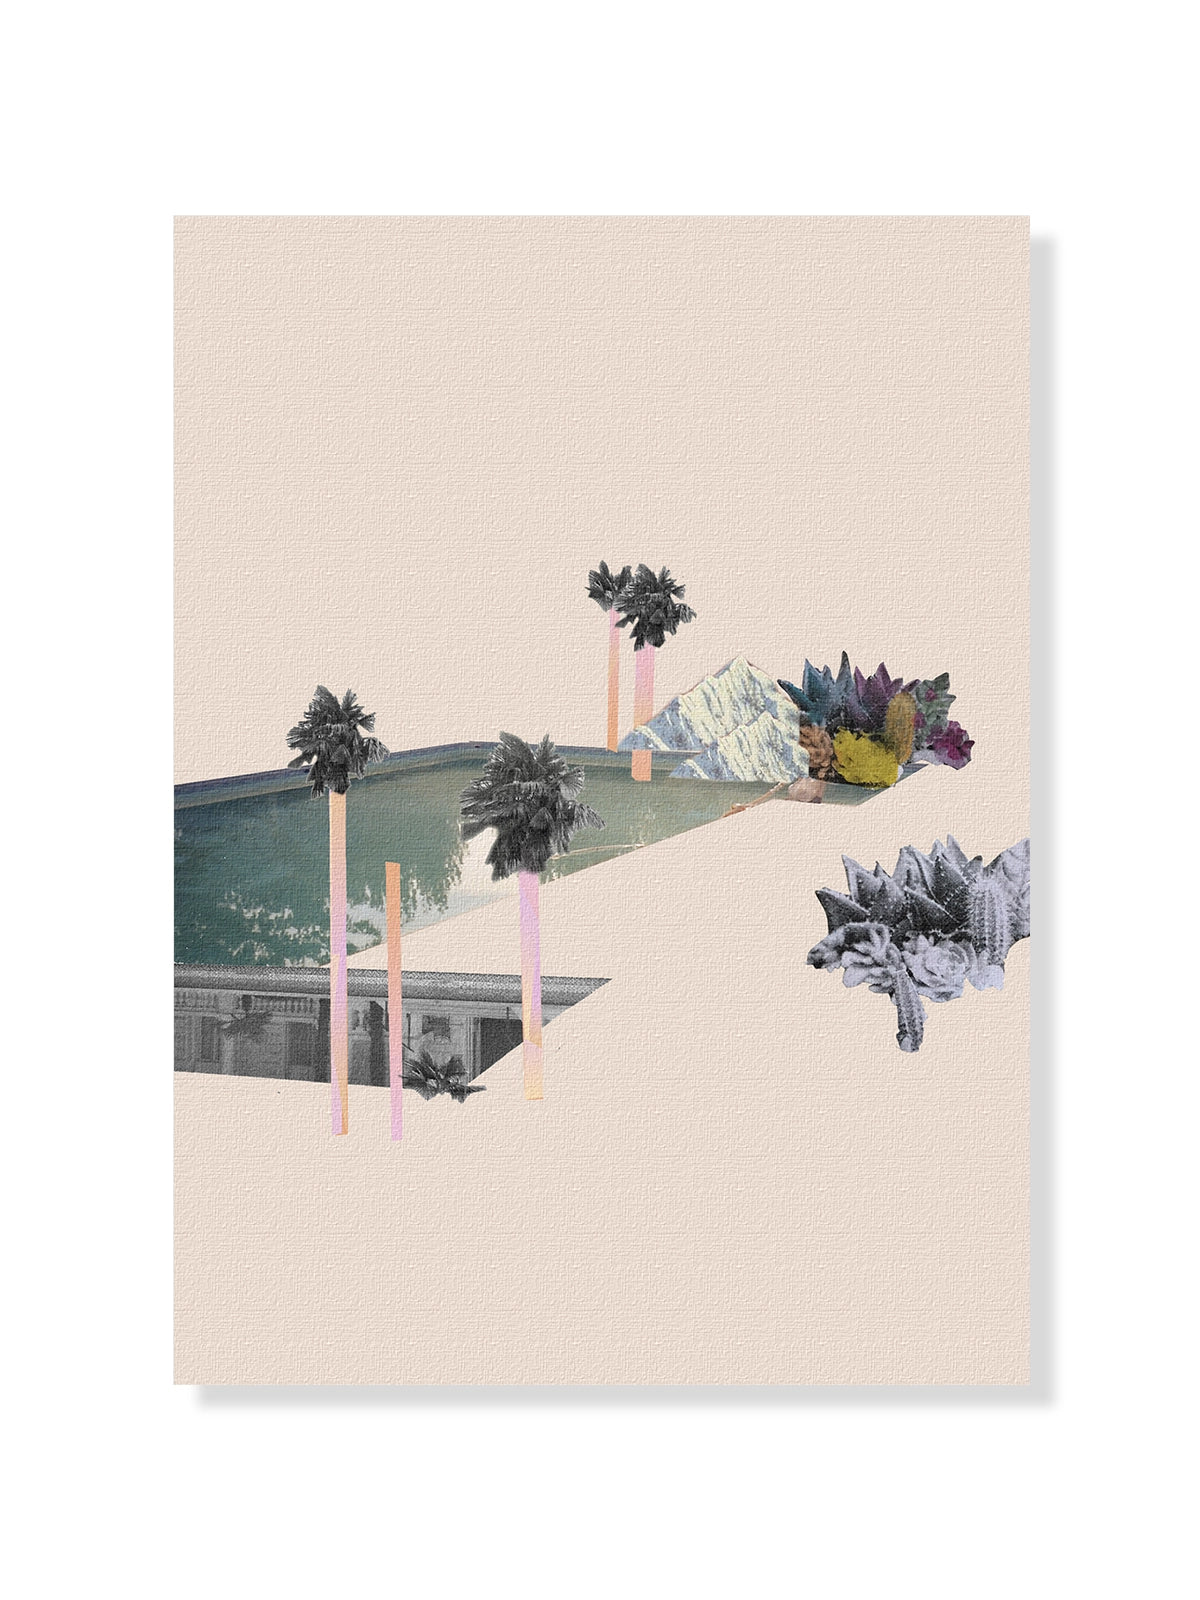 Swimming Pool - Una Lámina de Miki Lowe - Decora tu casa en Nomadart